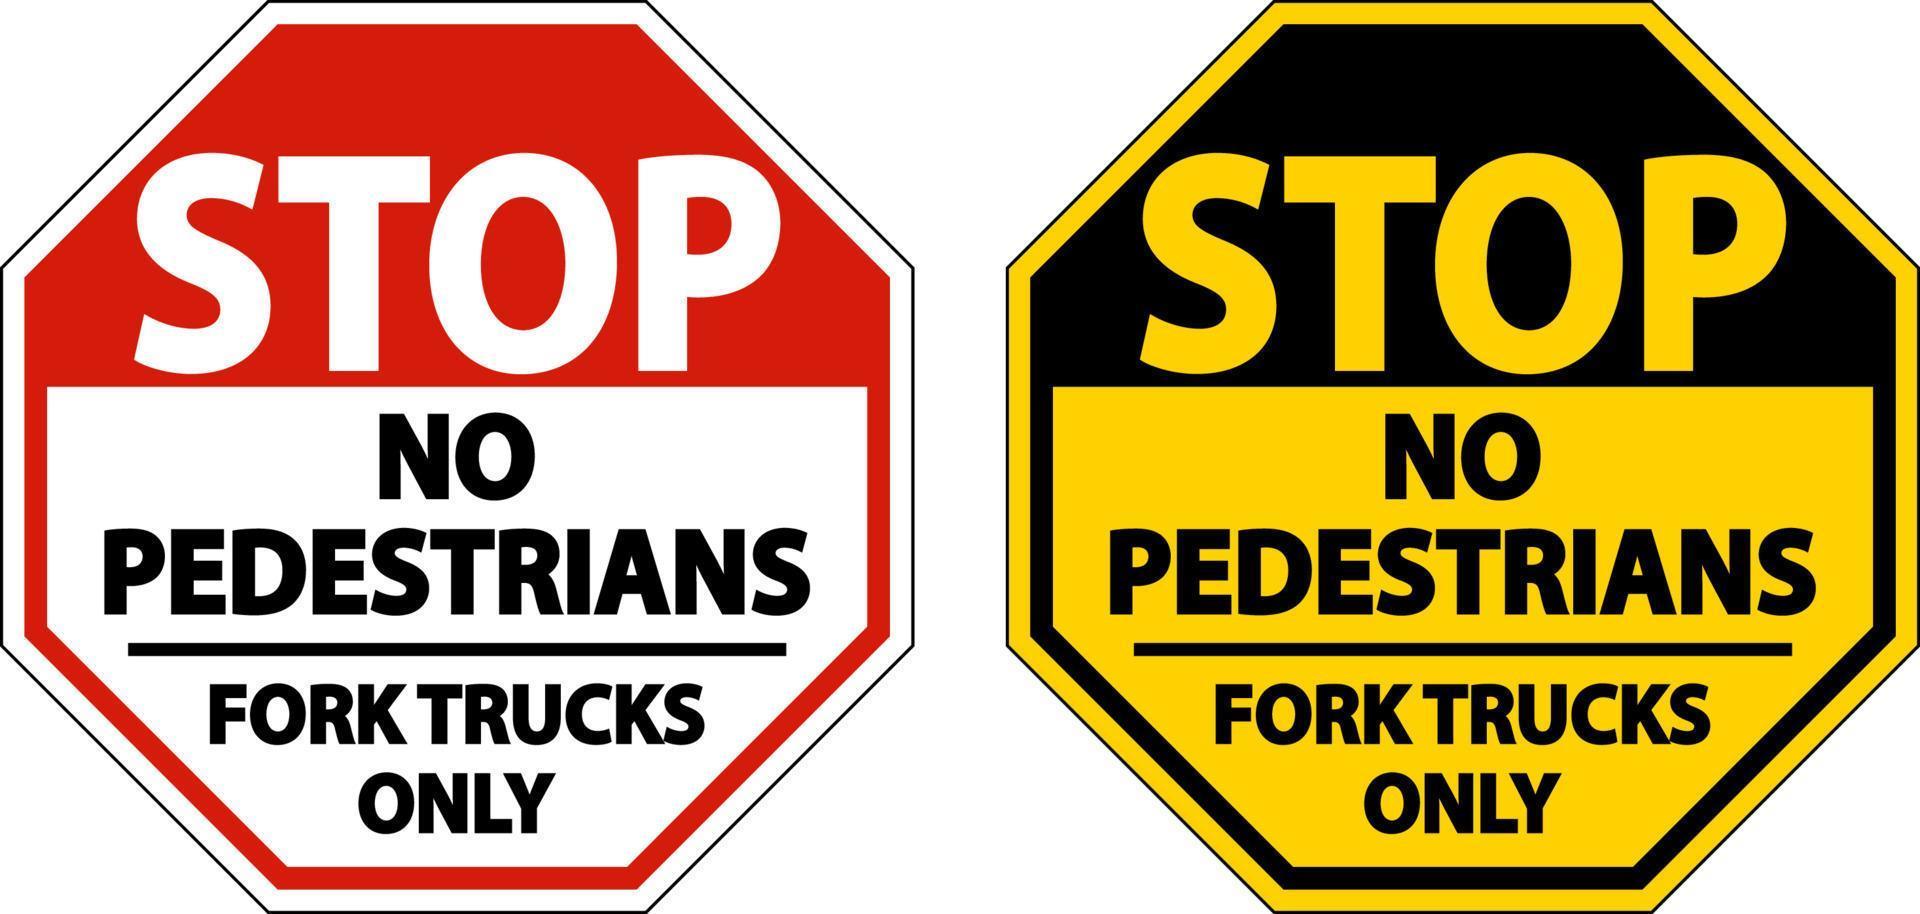 No Pedestrians Fork Trucks Only Sign On White Background vector